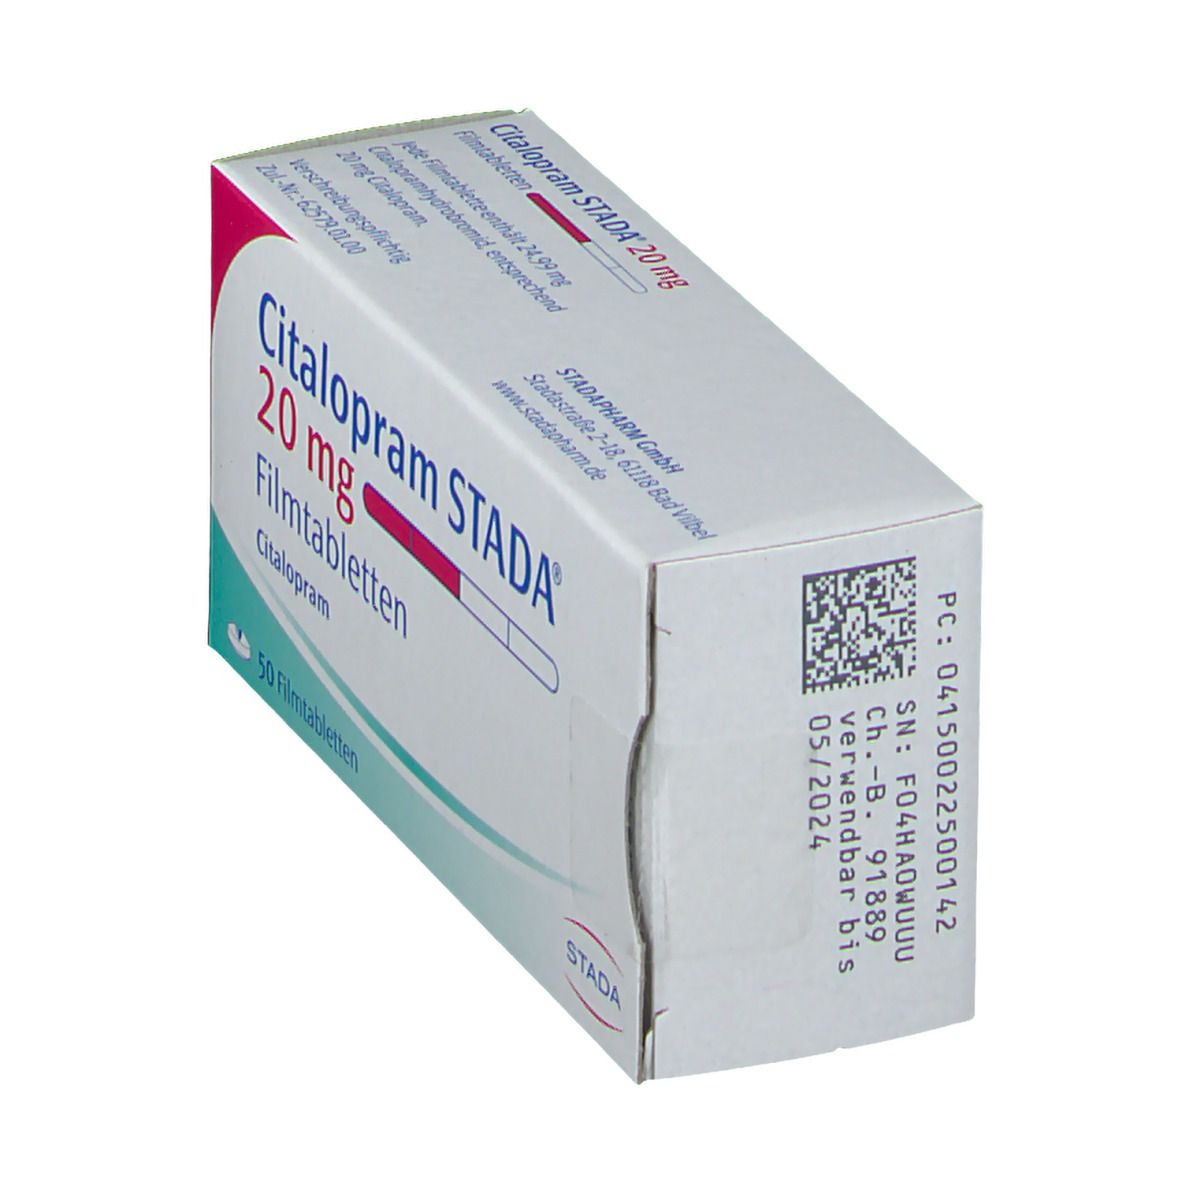 Citalopram STADA®® 20 mg